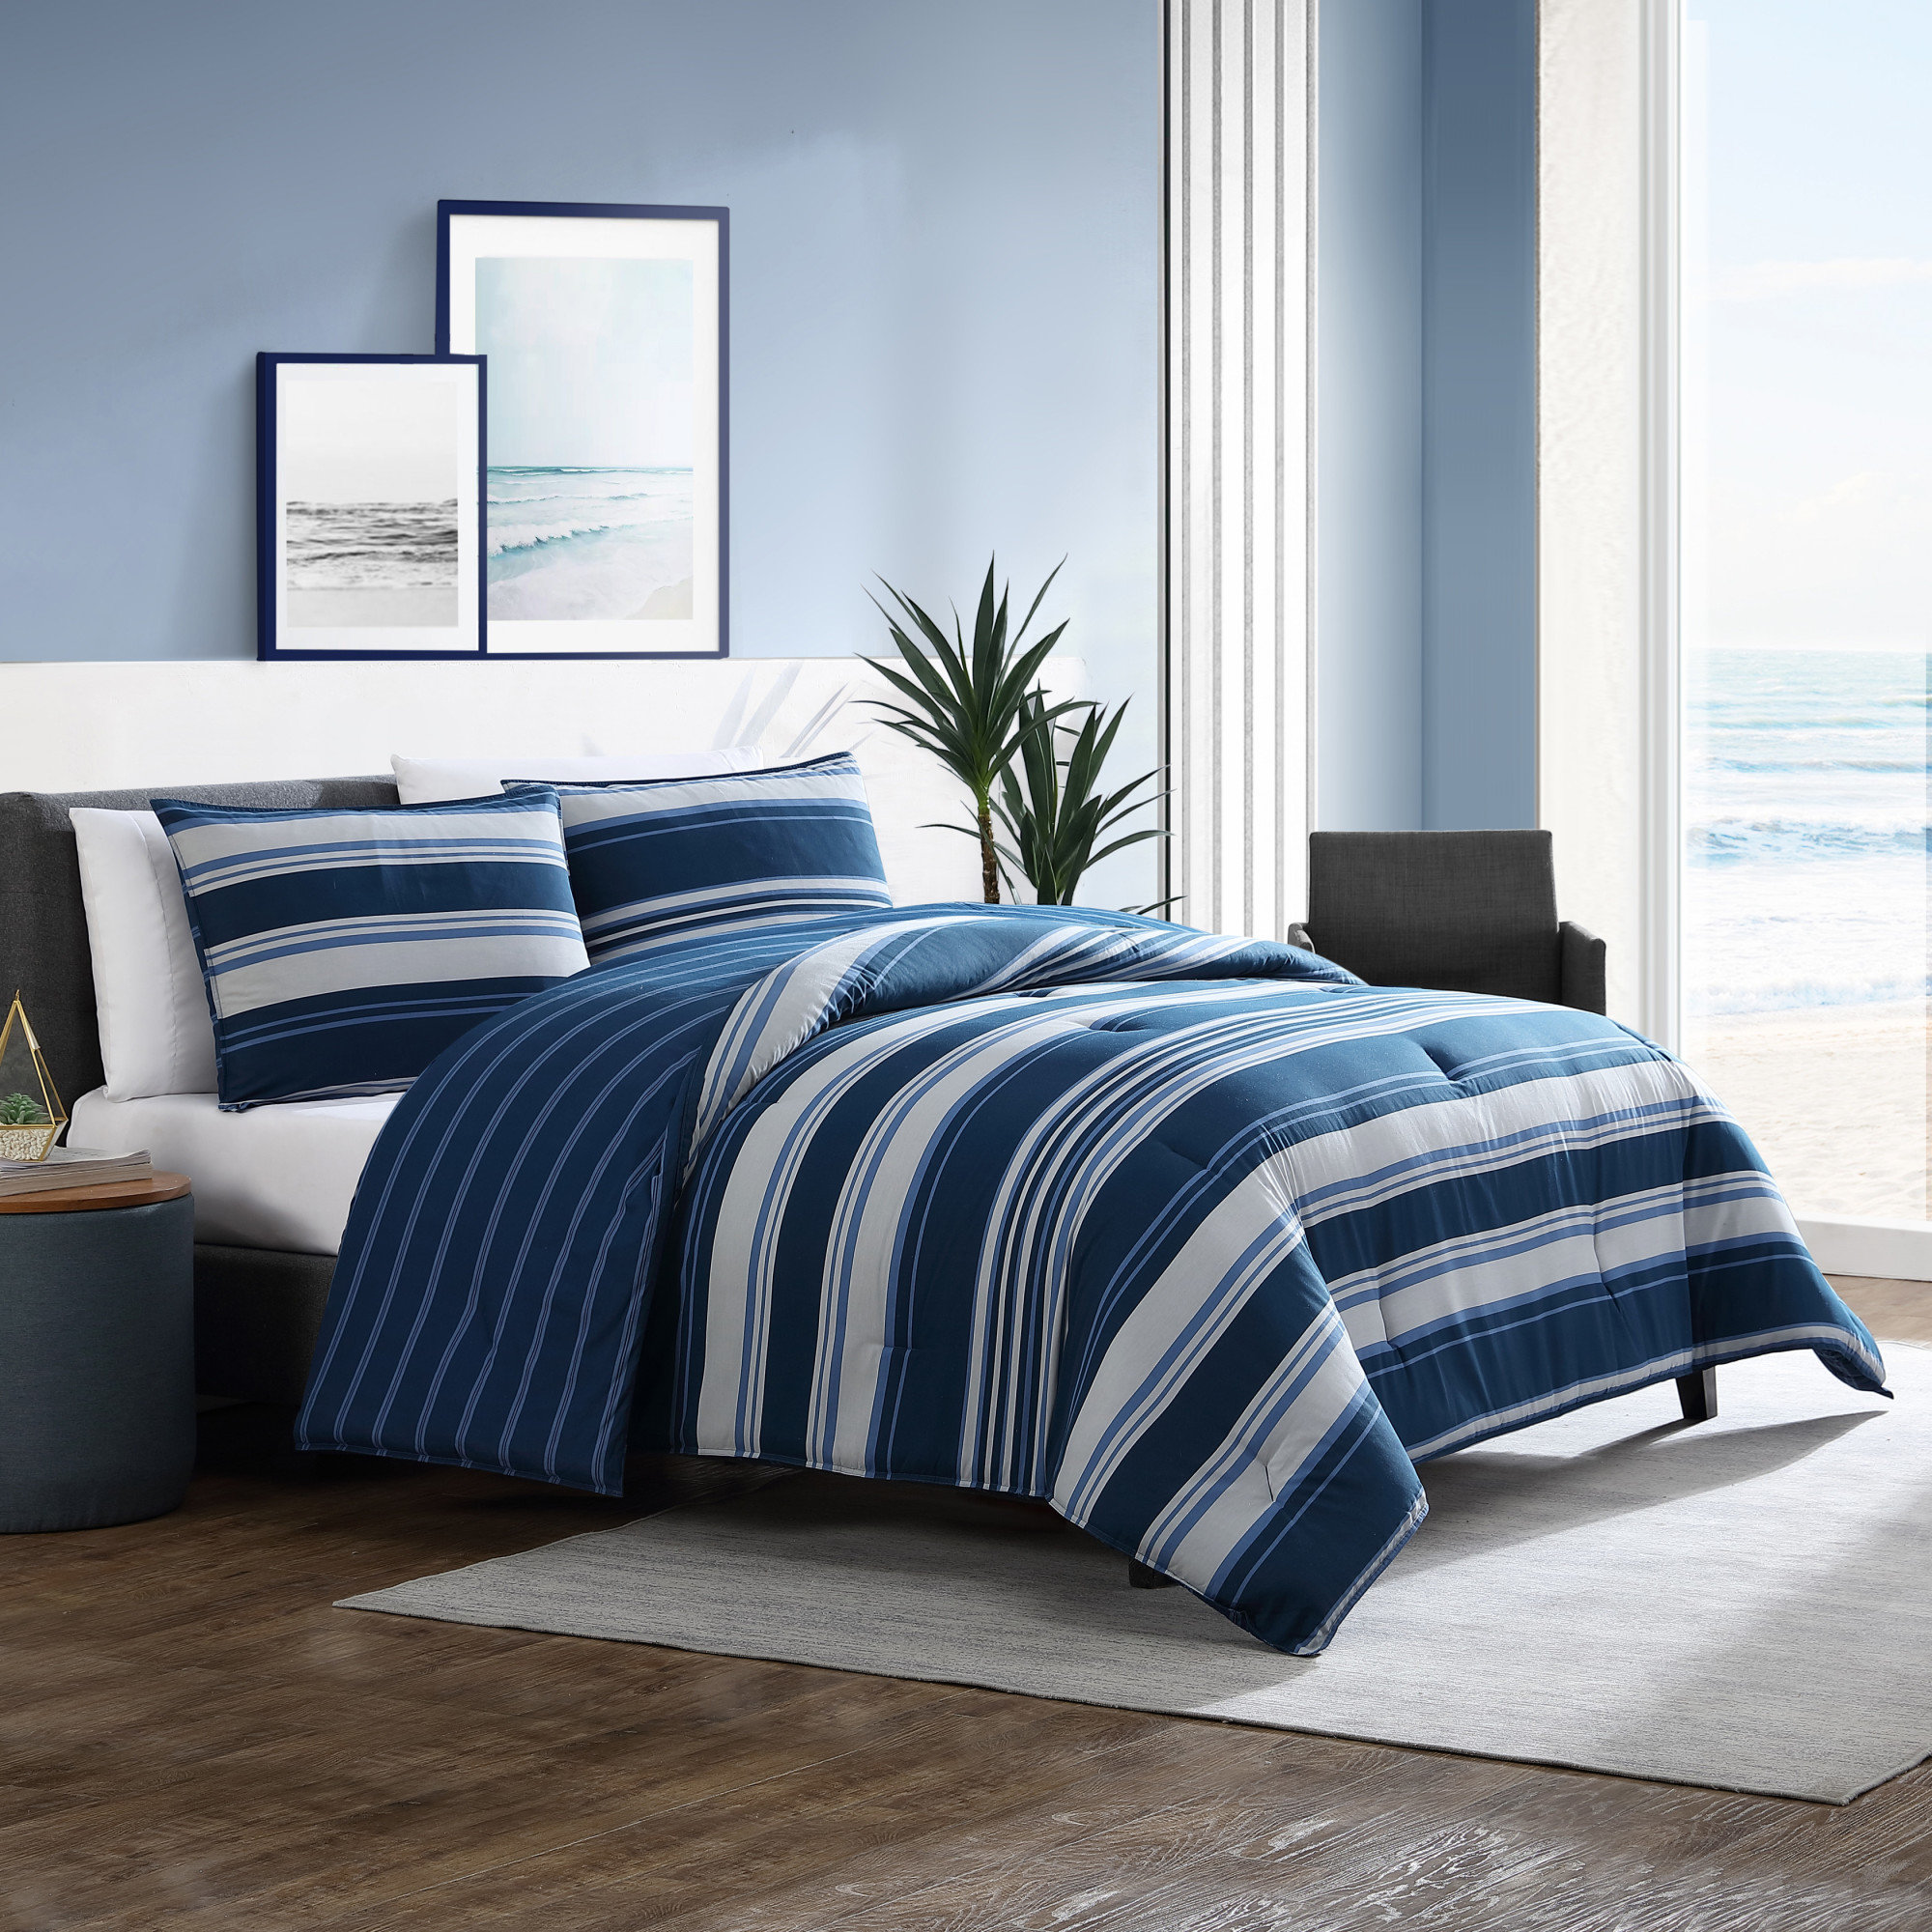 Nautica Mieola 3-Piece Navy Blue Striped Cotton King Comforter Set